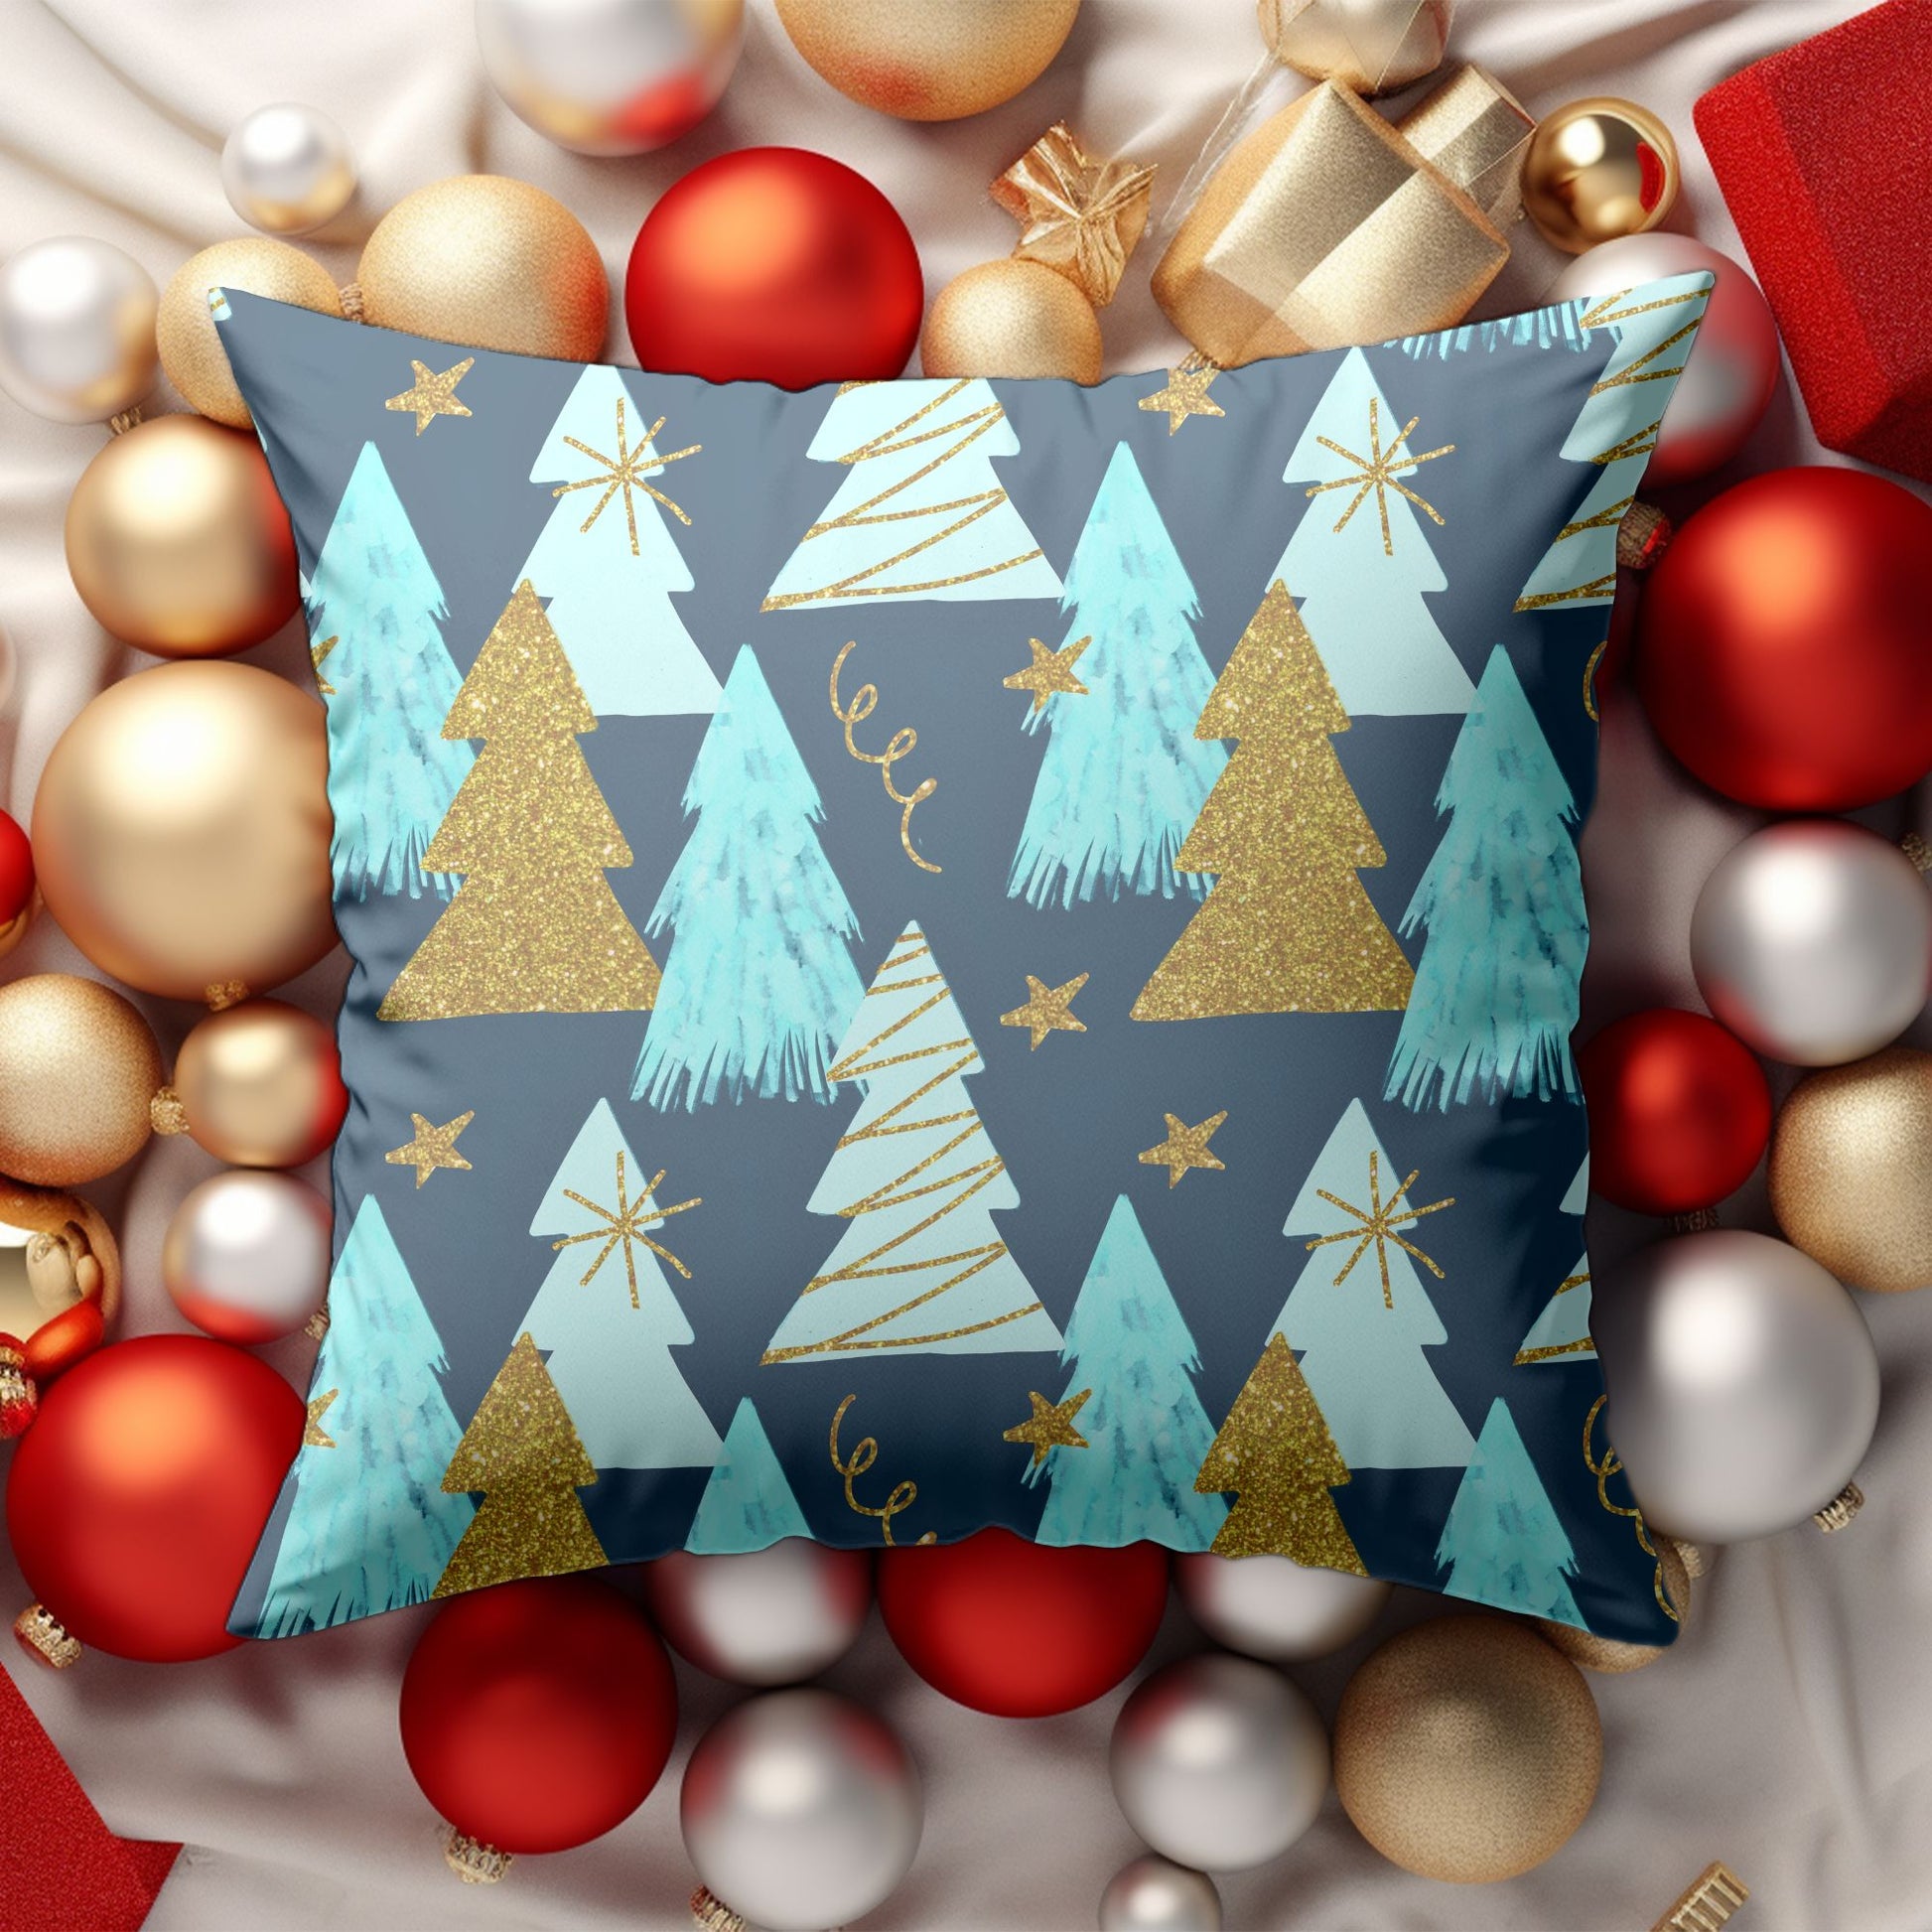 Festive Christmas Tree Design Pillow for Holiday Decor